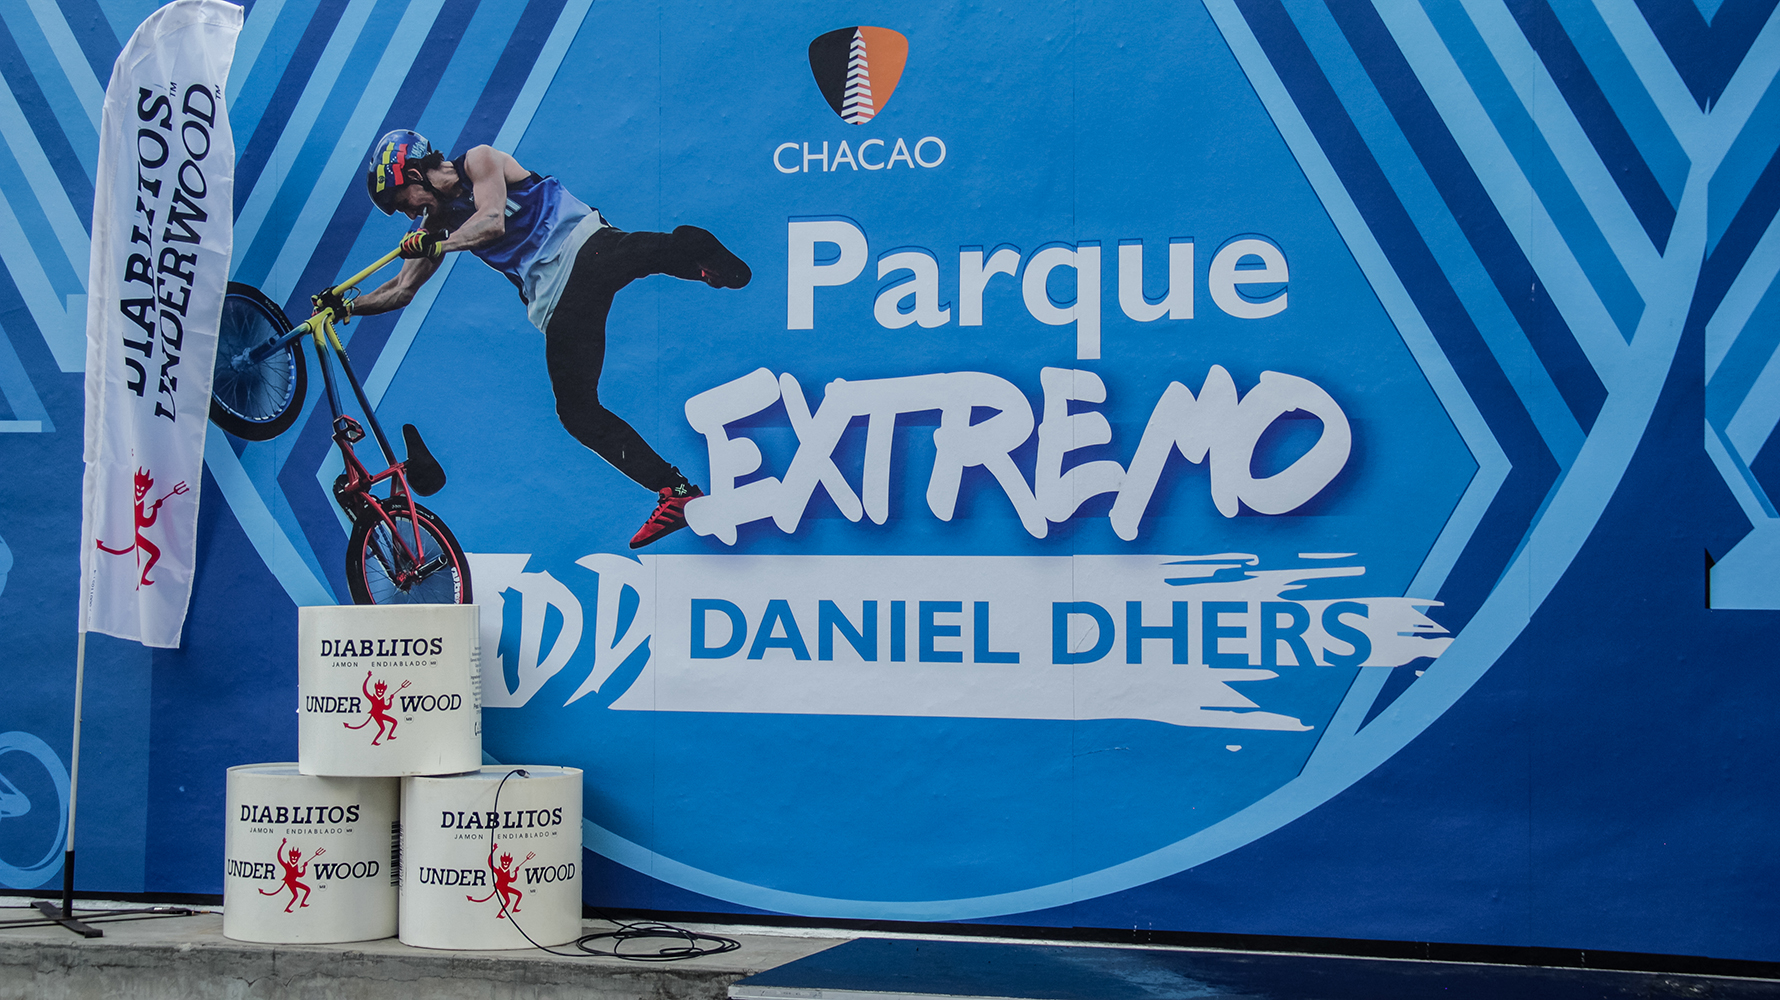 Parque Extremo Daniel Dhers - 125 Aniversario